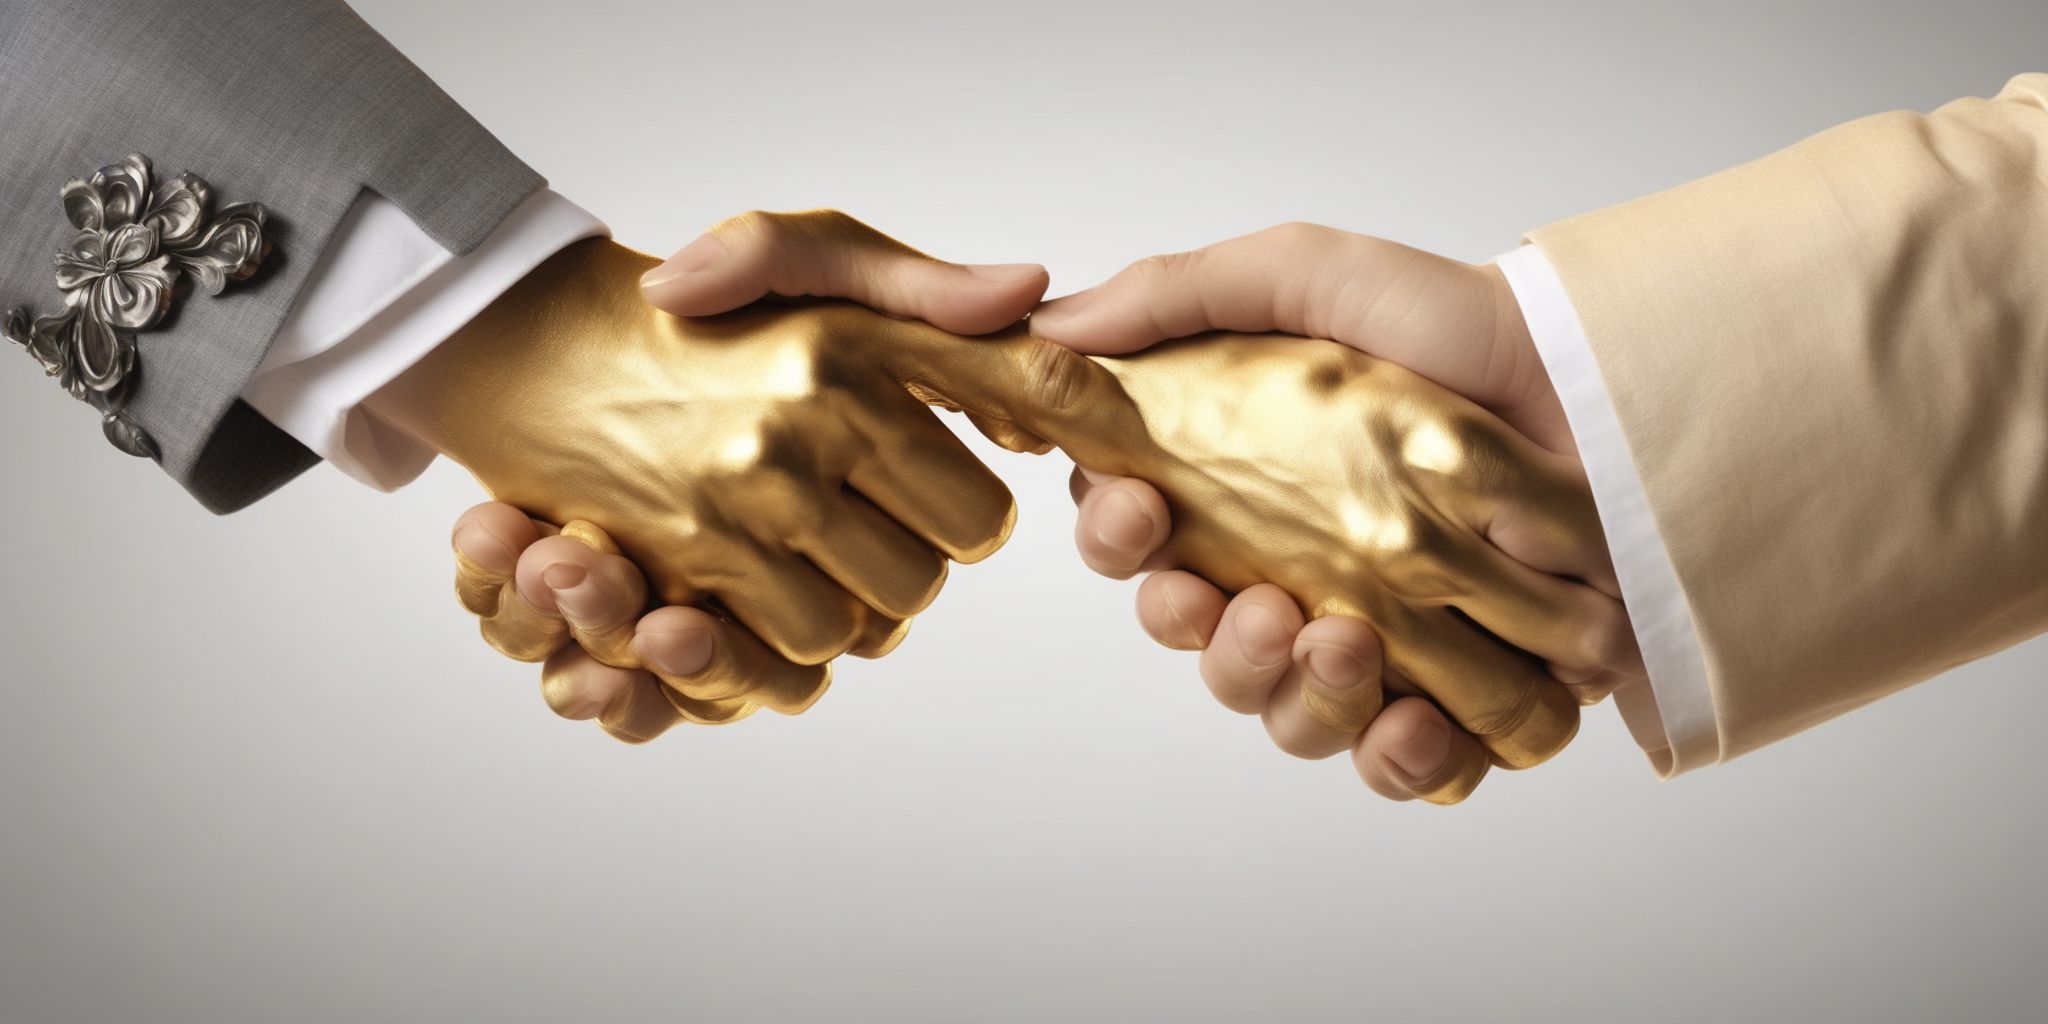 Golden handshake  in realistic, photographic style